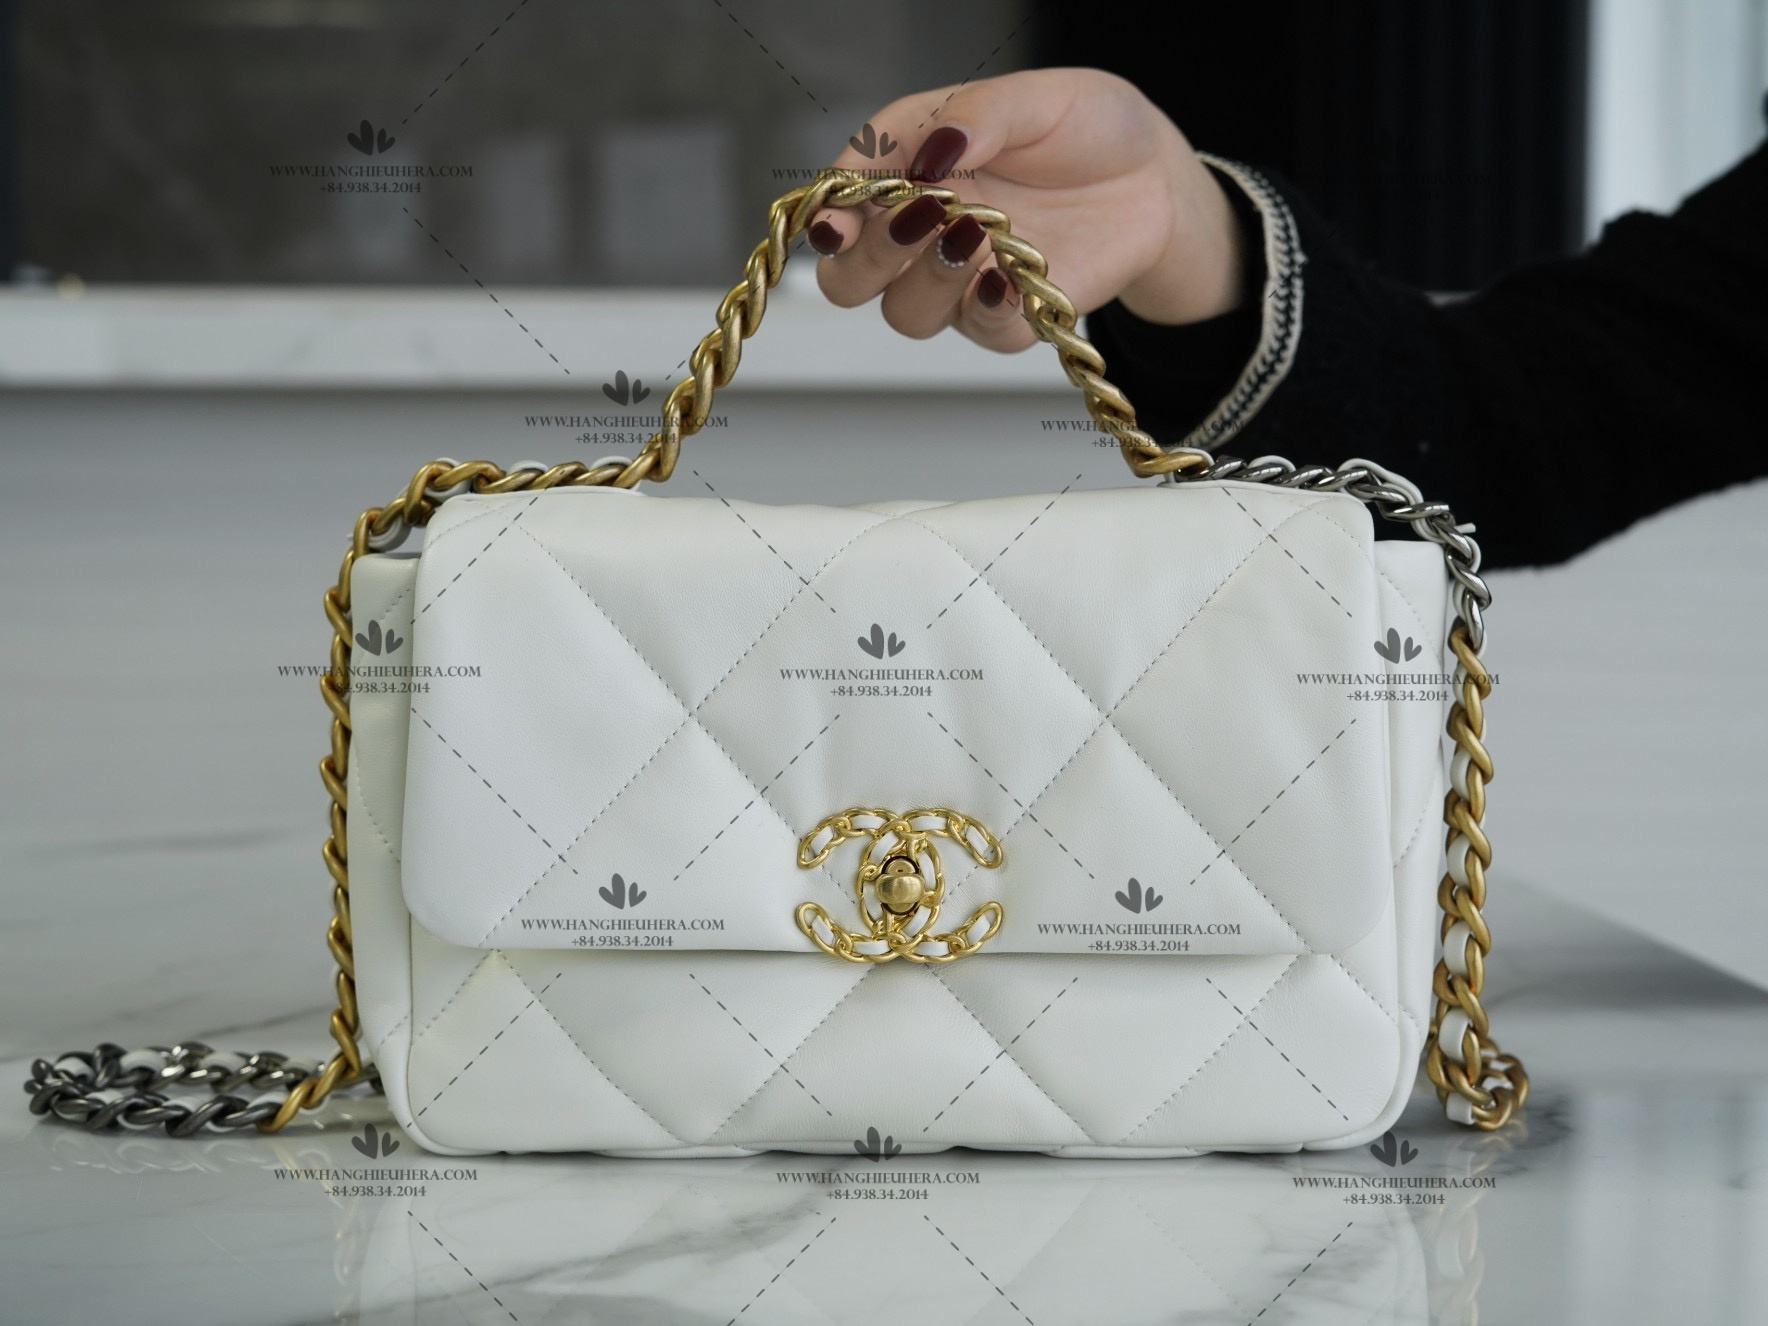 Goatskin GoldTone SilverTone  RutheniumFinish Metal White CHANEL 19  Large Flap Bag  CHANEL  Bags Chanel bag Chanel 19 bag